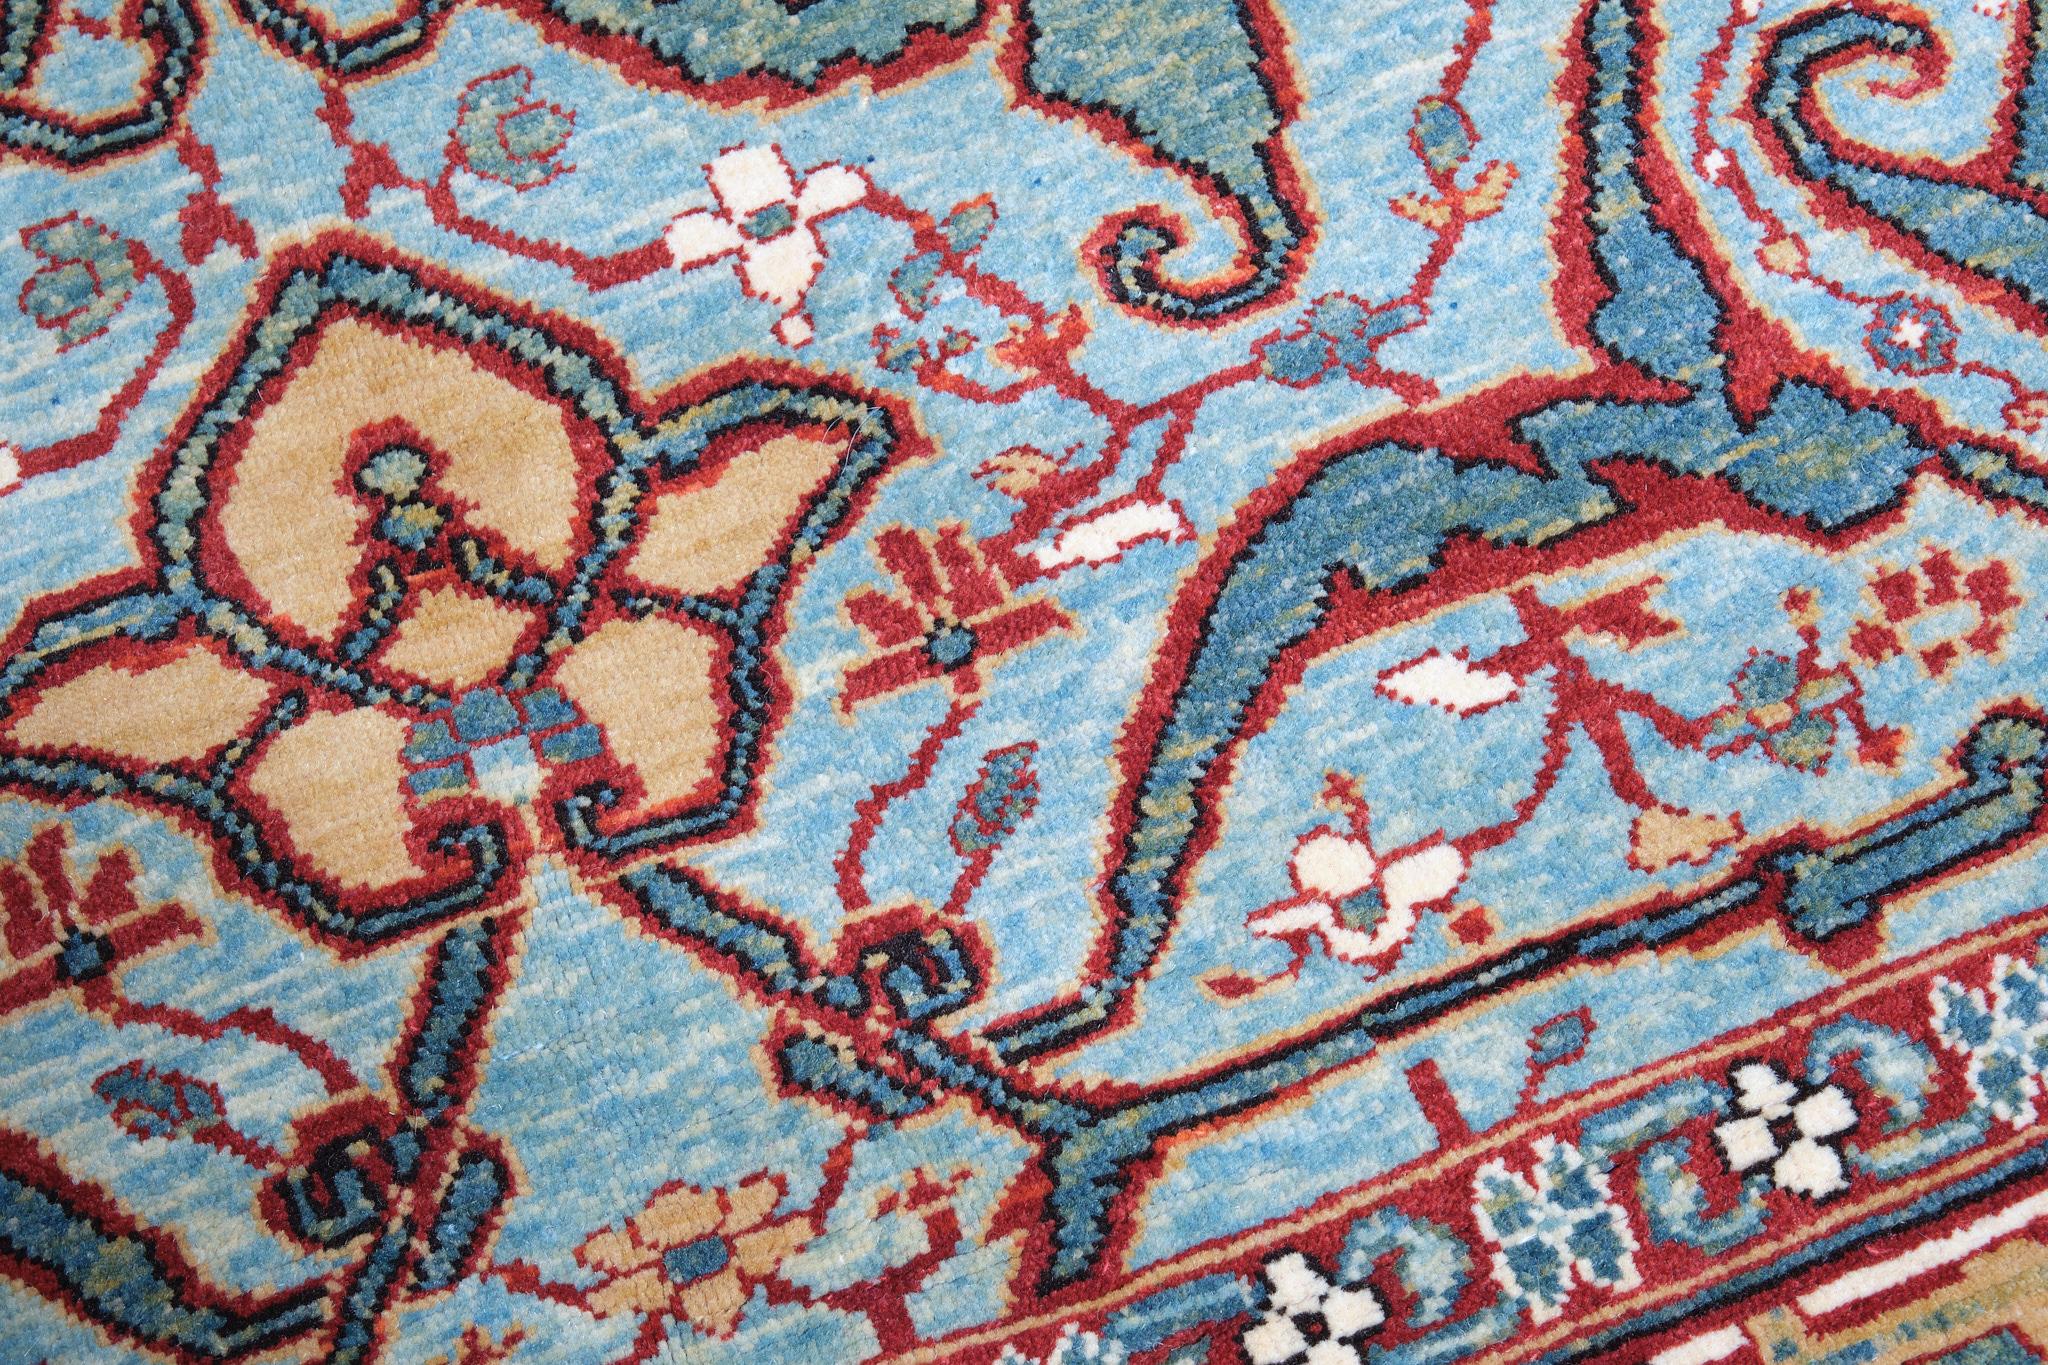 Vegetable Dyed Ararat Rugs Arabesque Rug 19th Century Style Persian Kurdish Revival Carpet For Sale